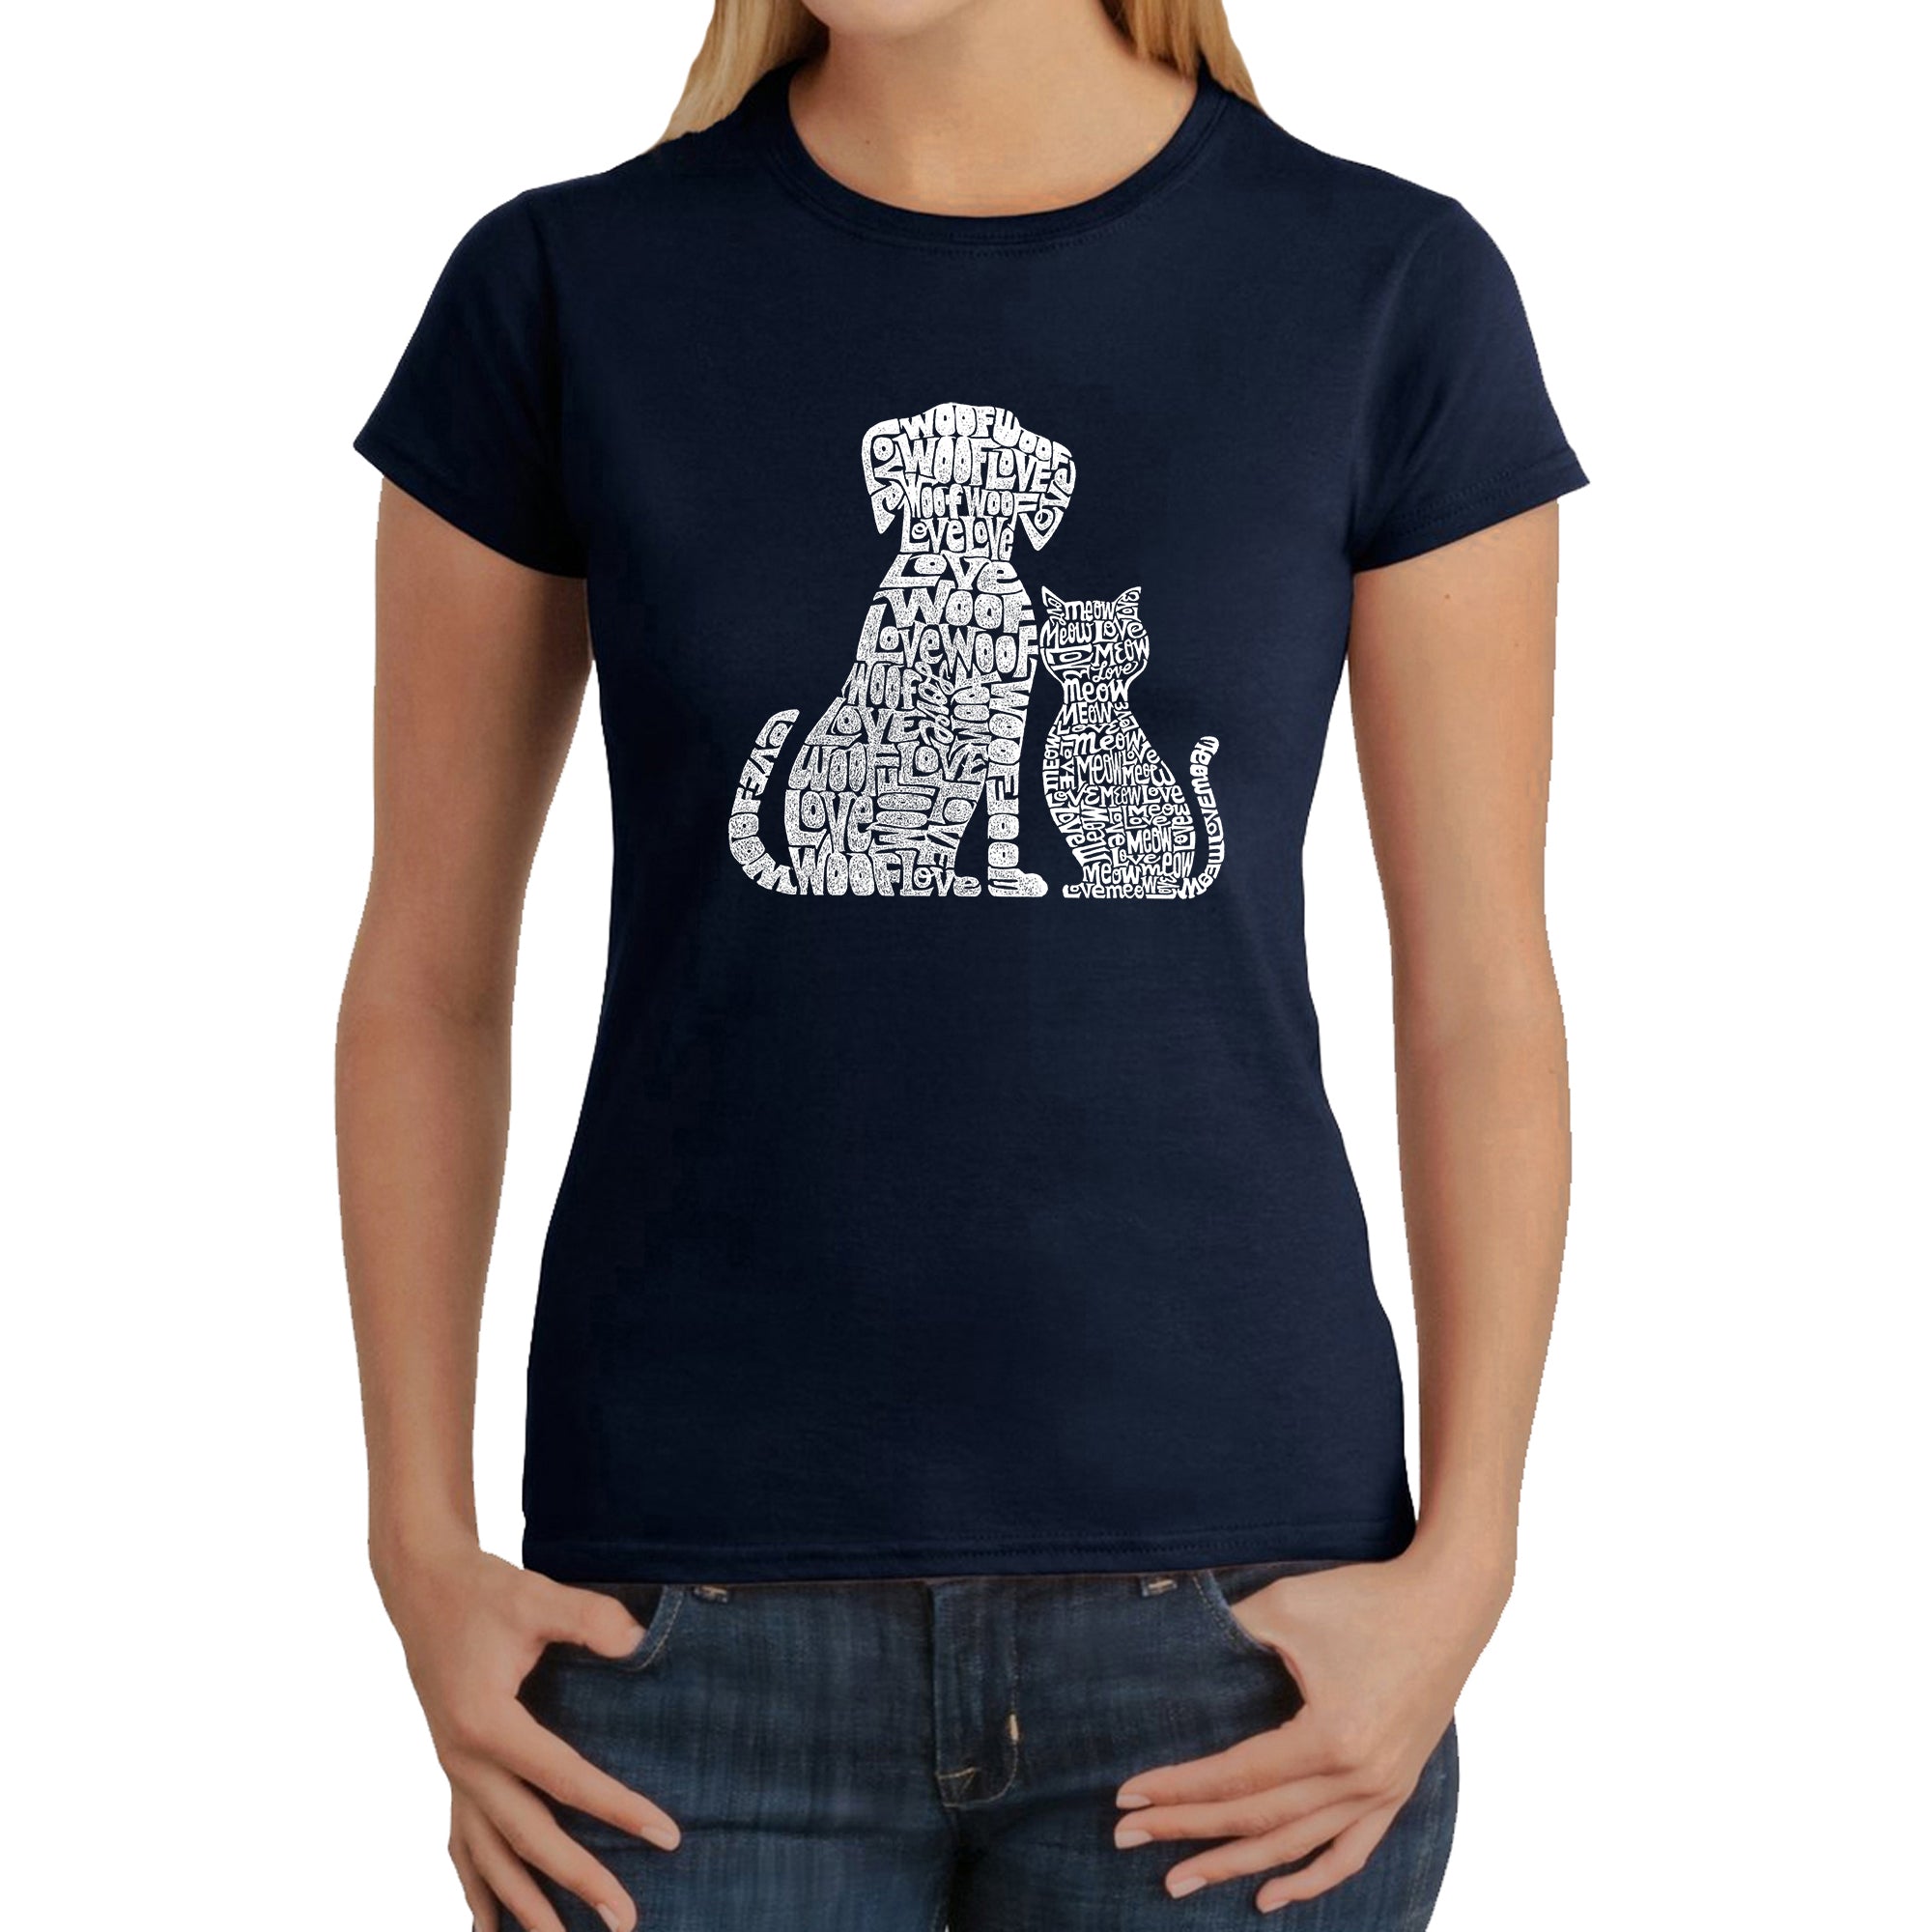 Dogs And Cats - Women's Word Art T-Shirt - Navy - Medium